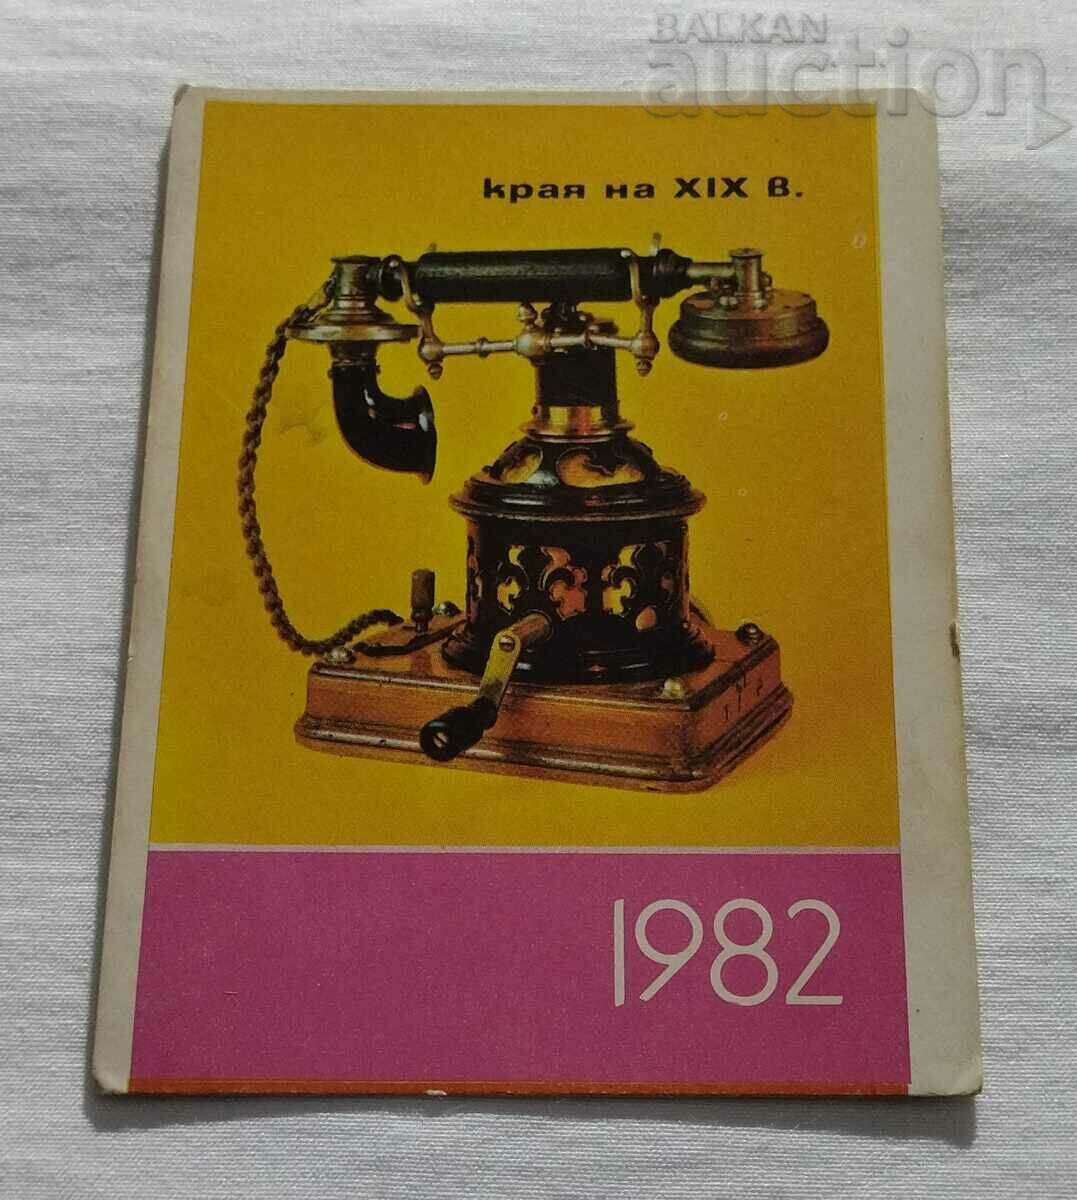 TELEPHONE MODEL END OF THE XIX CENTURY. CALENDAR 1982